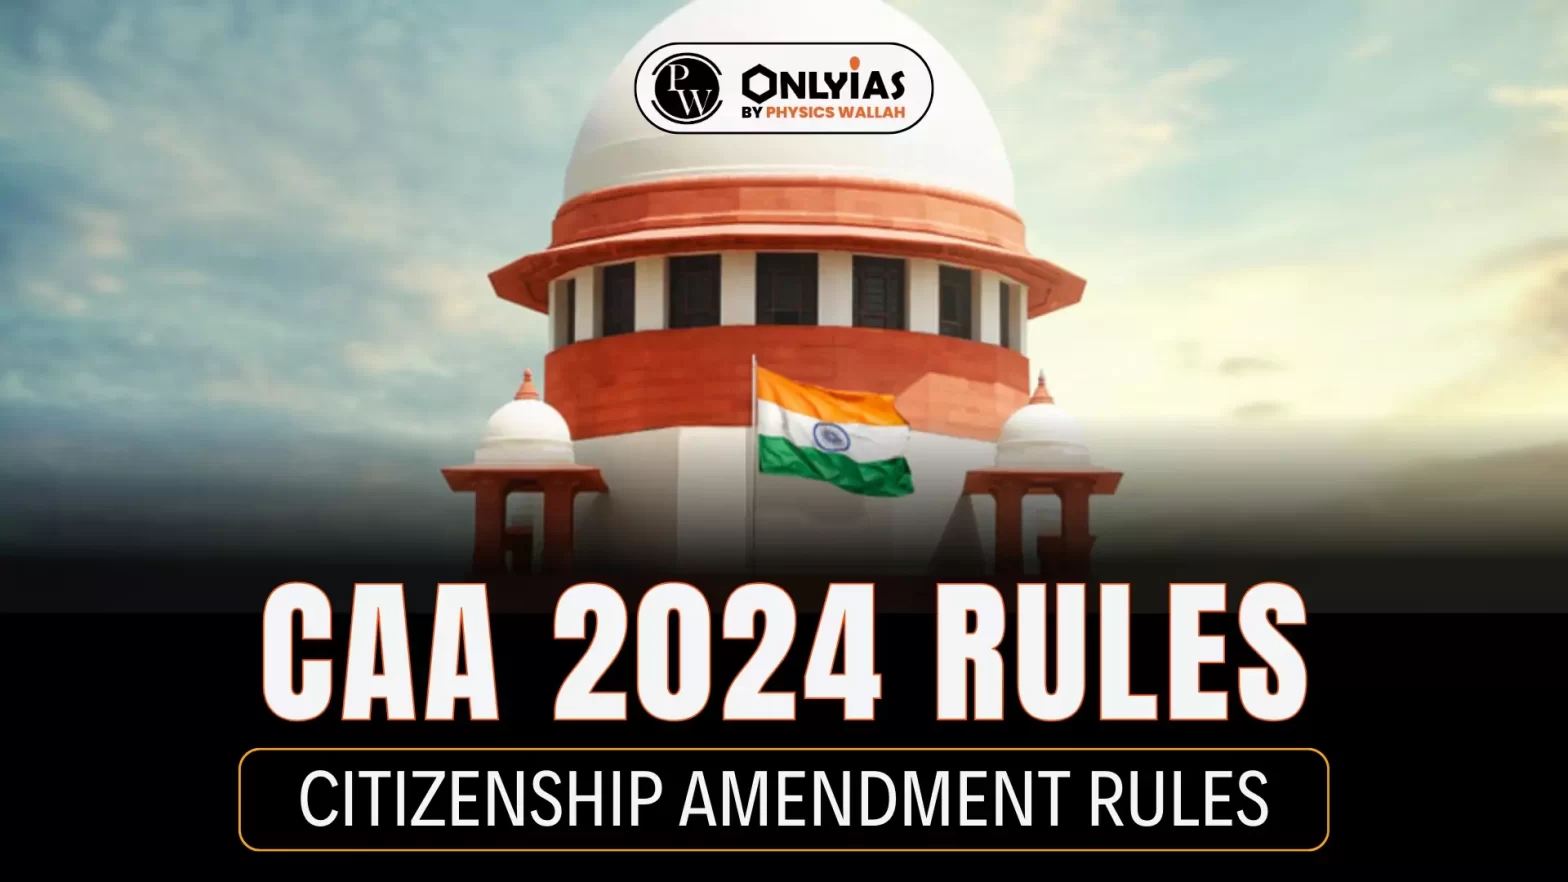 CAA 2024 Rules: Citizenship Amendment Rules